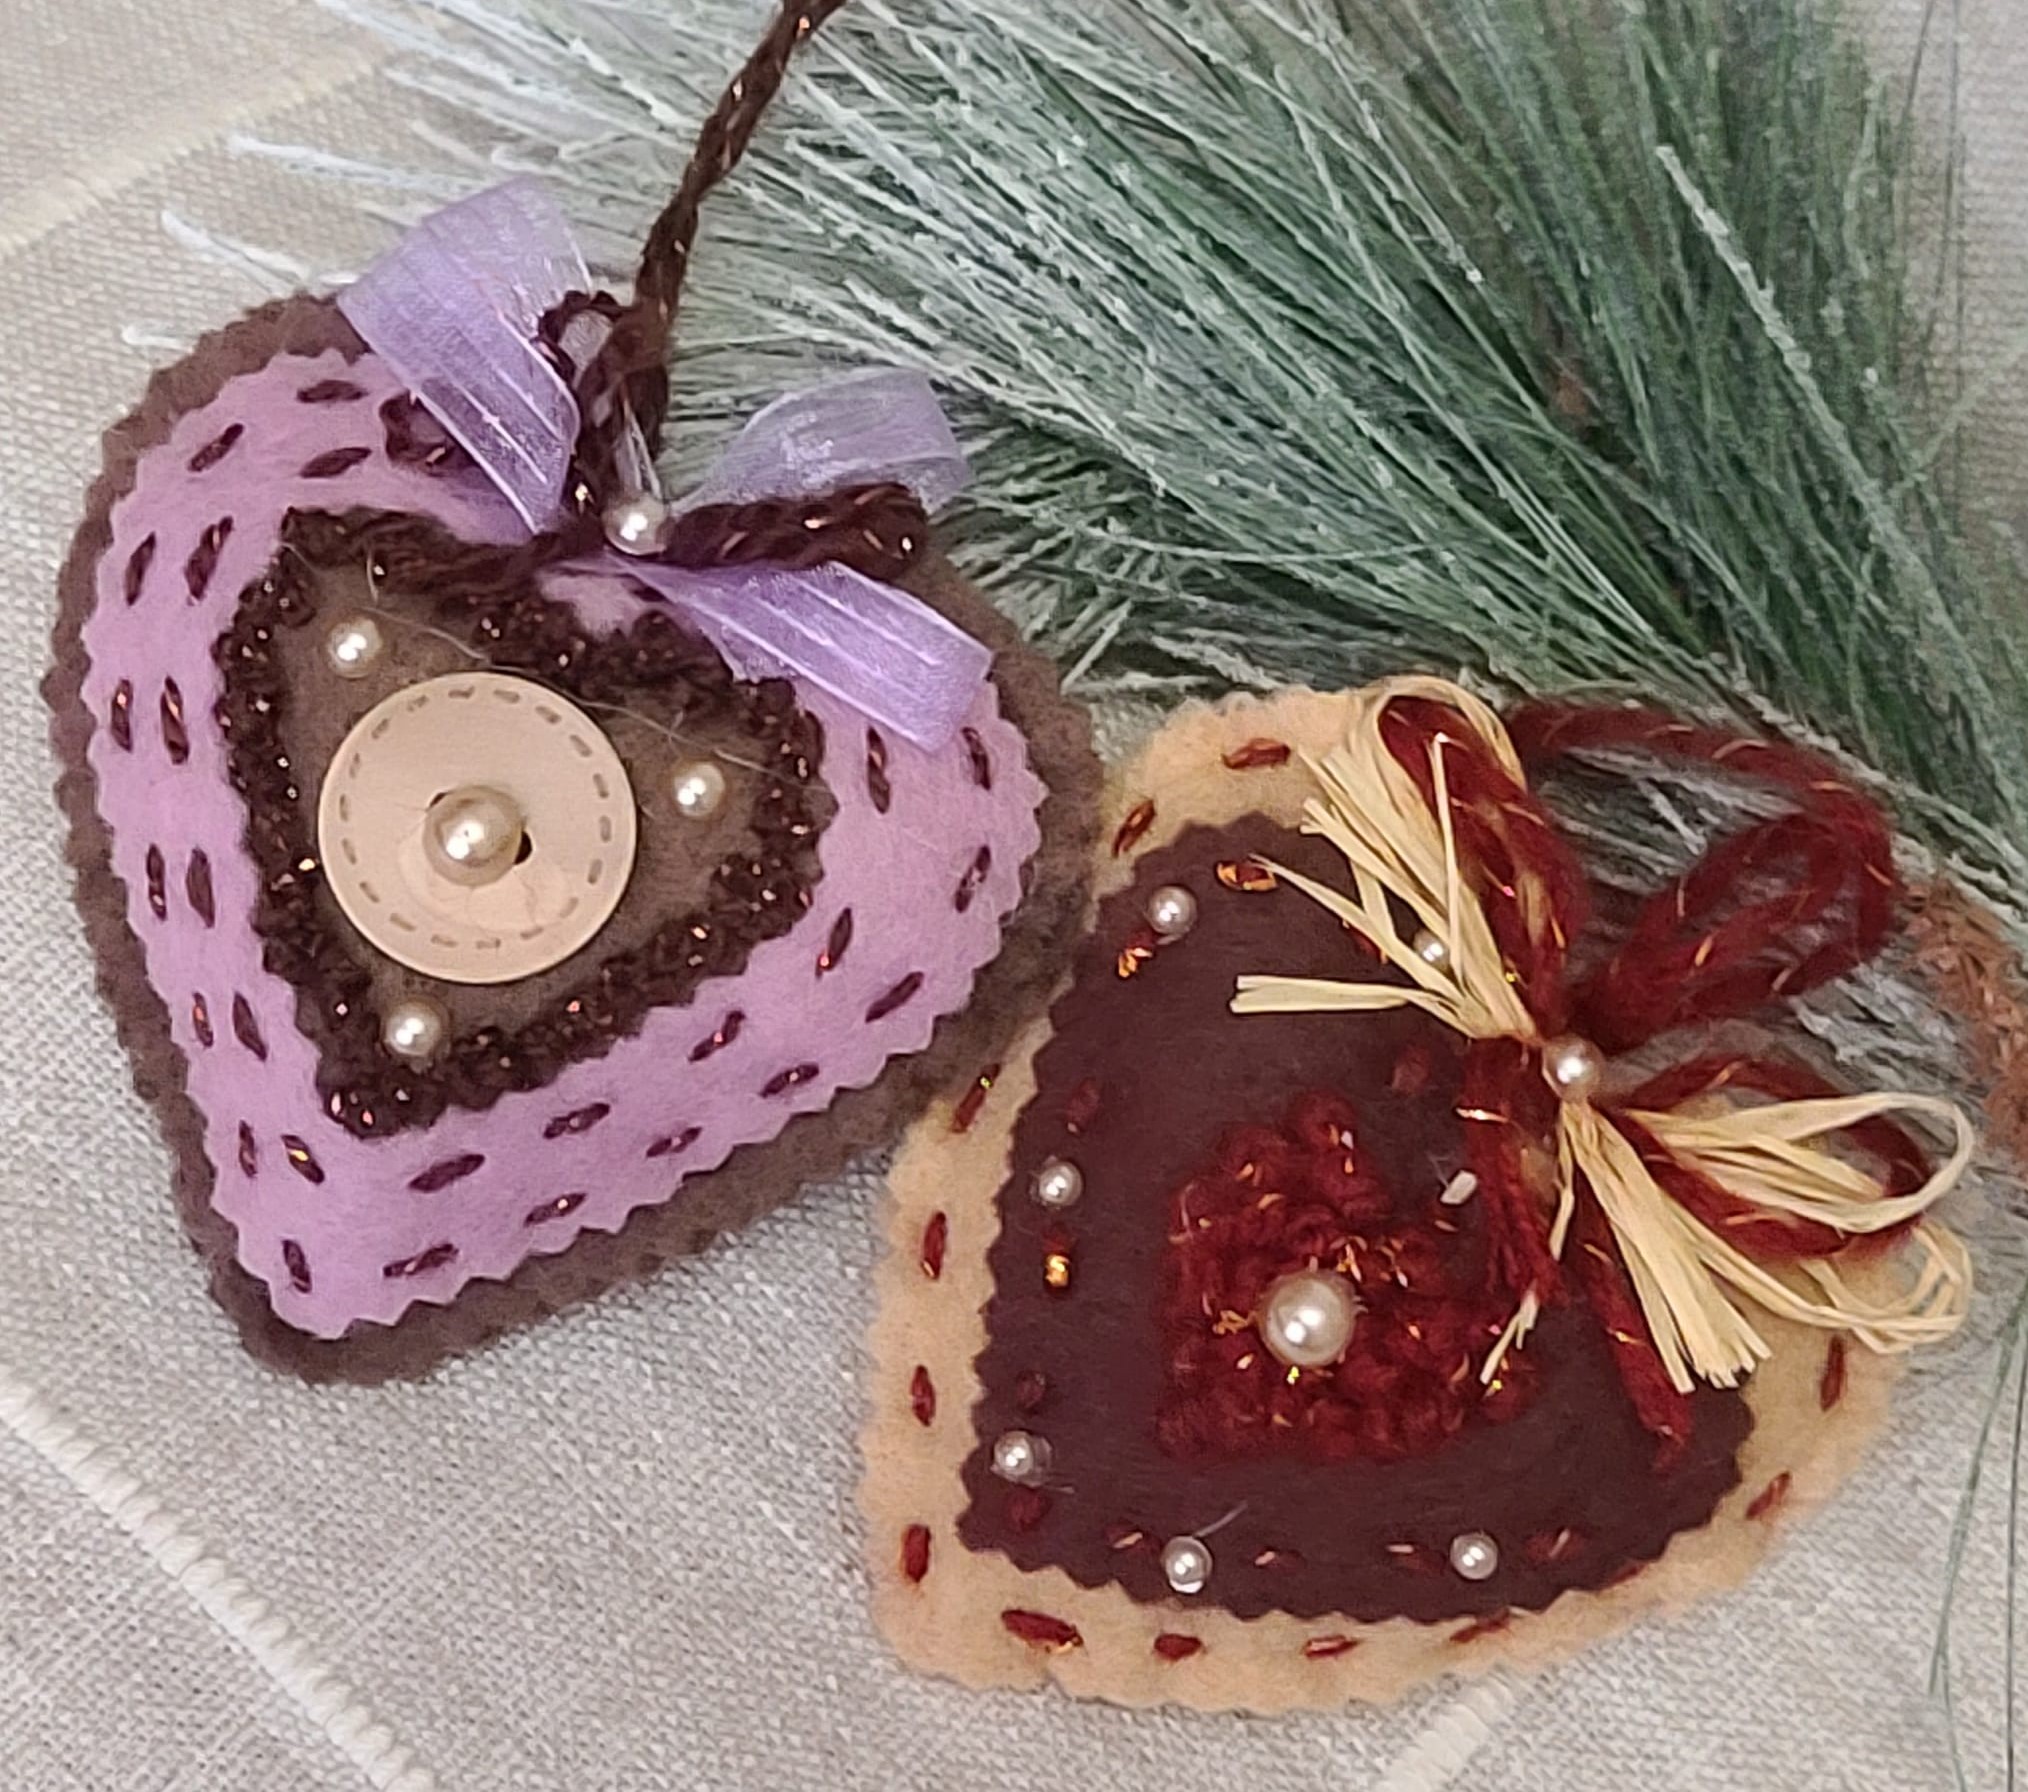 Handmade Felt Cookie Dough and Chocolate Heart Ornament Set of 2 - Click Image to Close